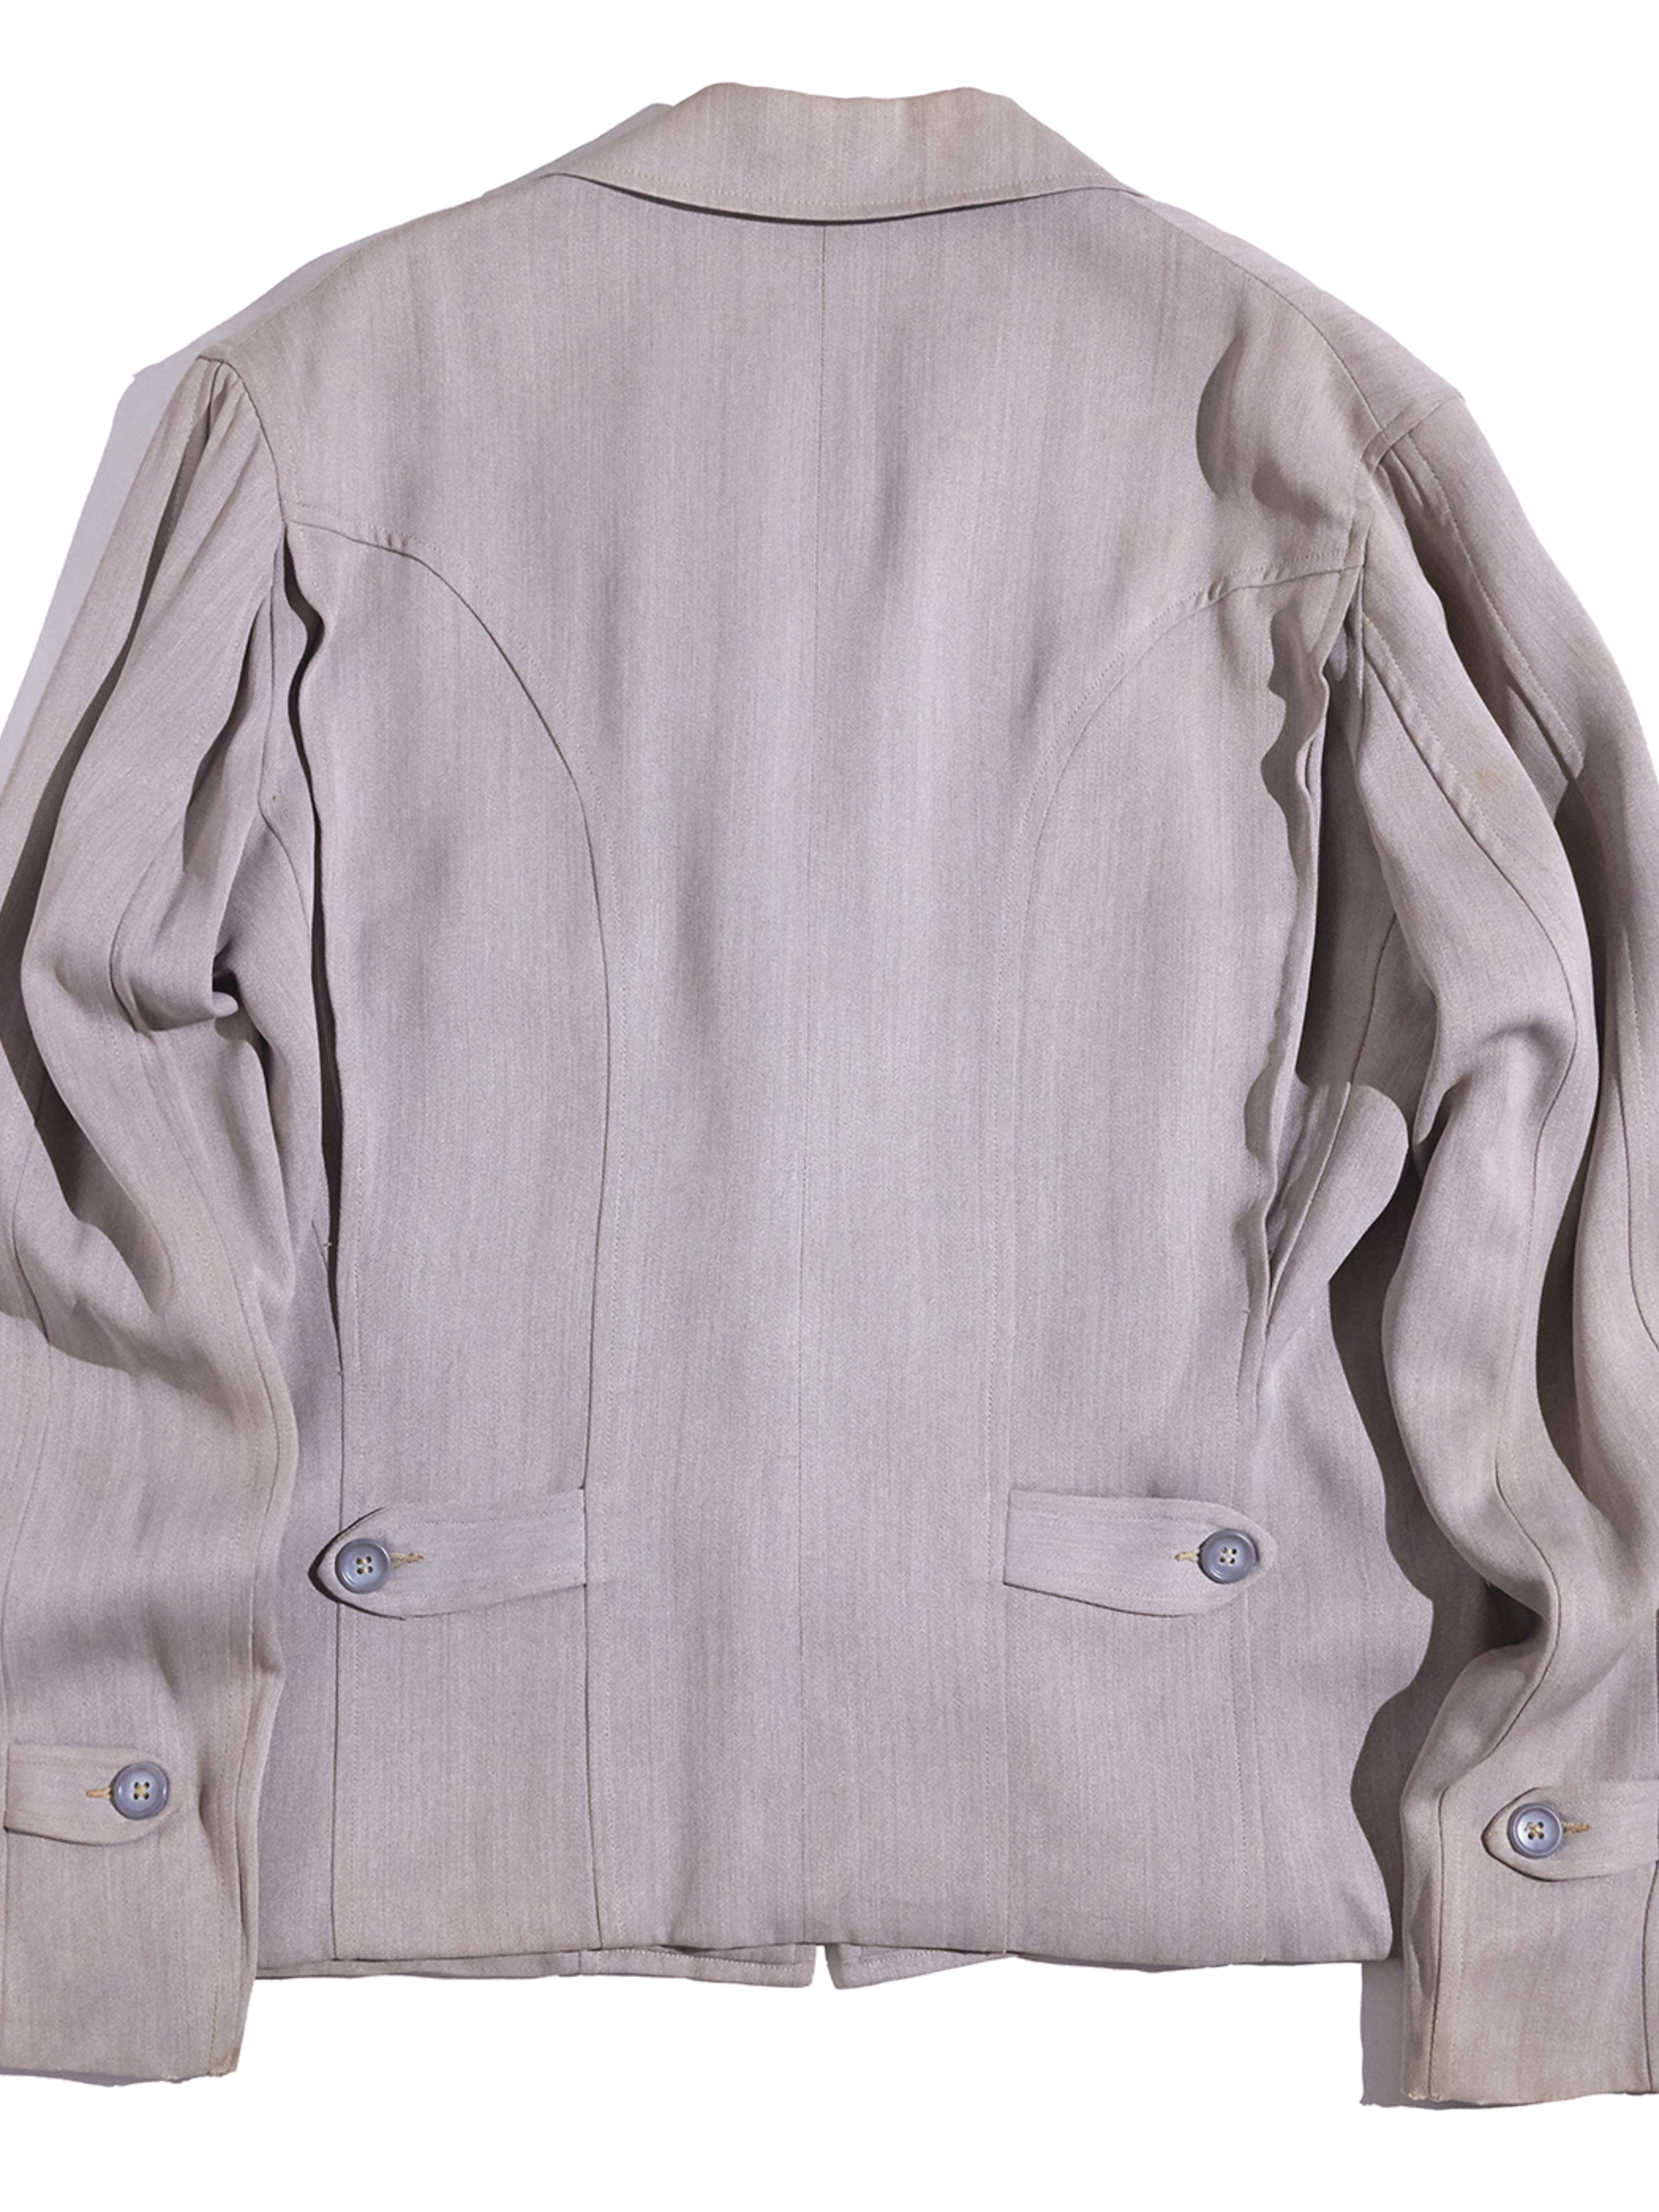 1950s "Glenshore" rayon gabardine jacket -GREY-